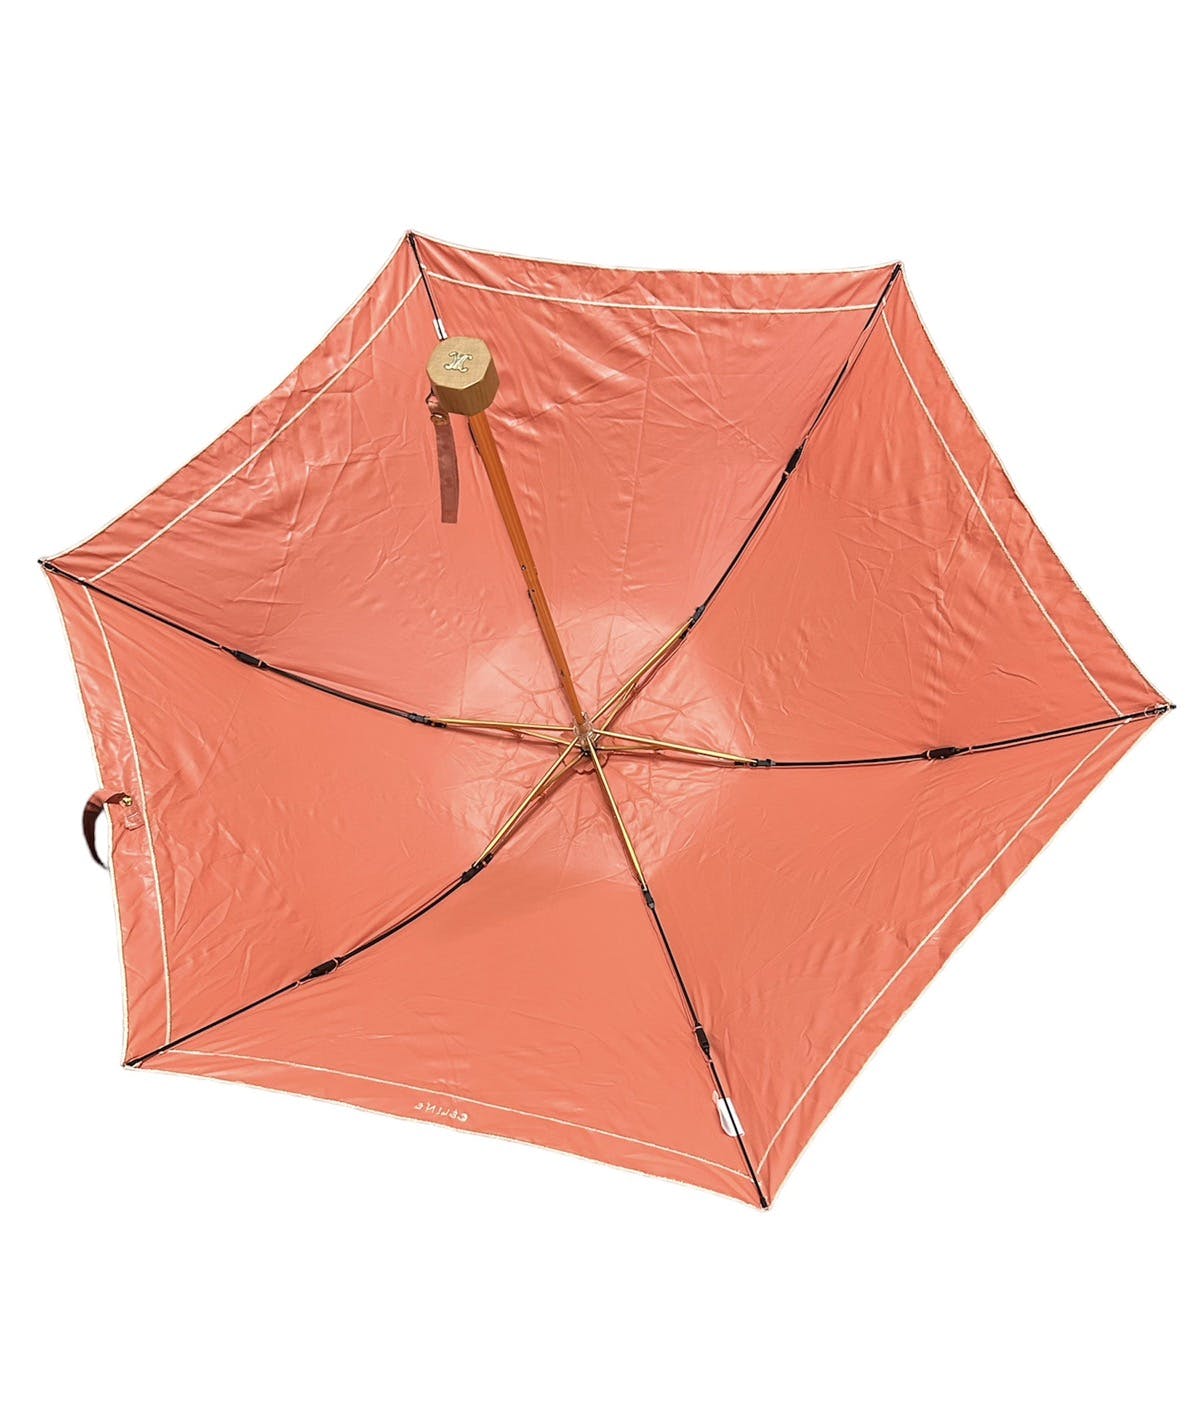 Celine Umbrella With Wooden Handle - 2